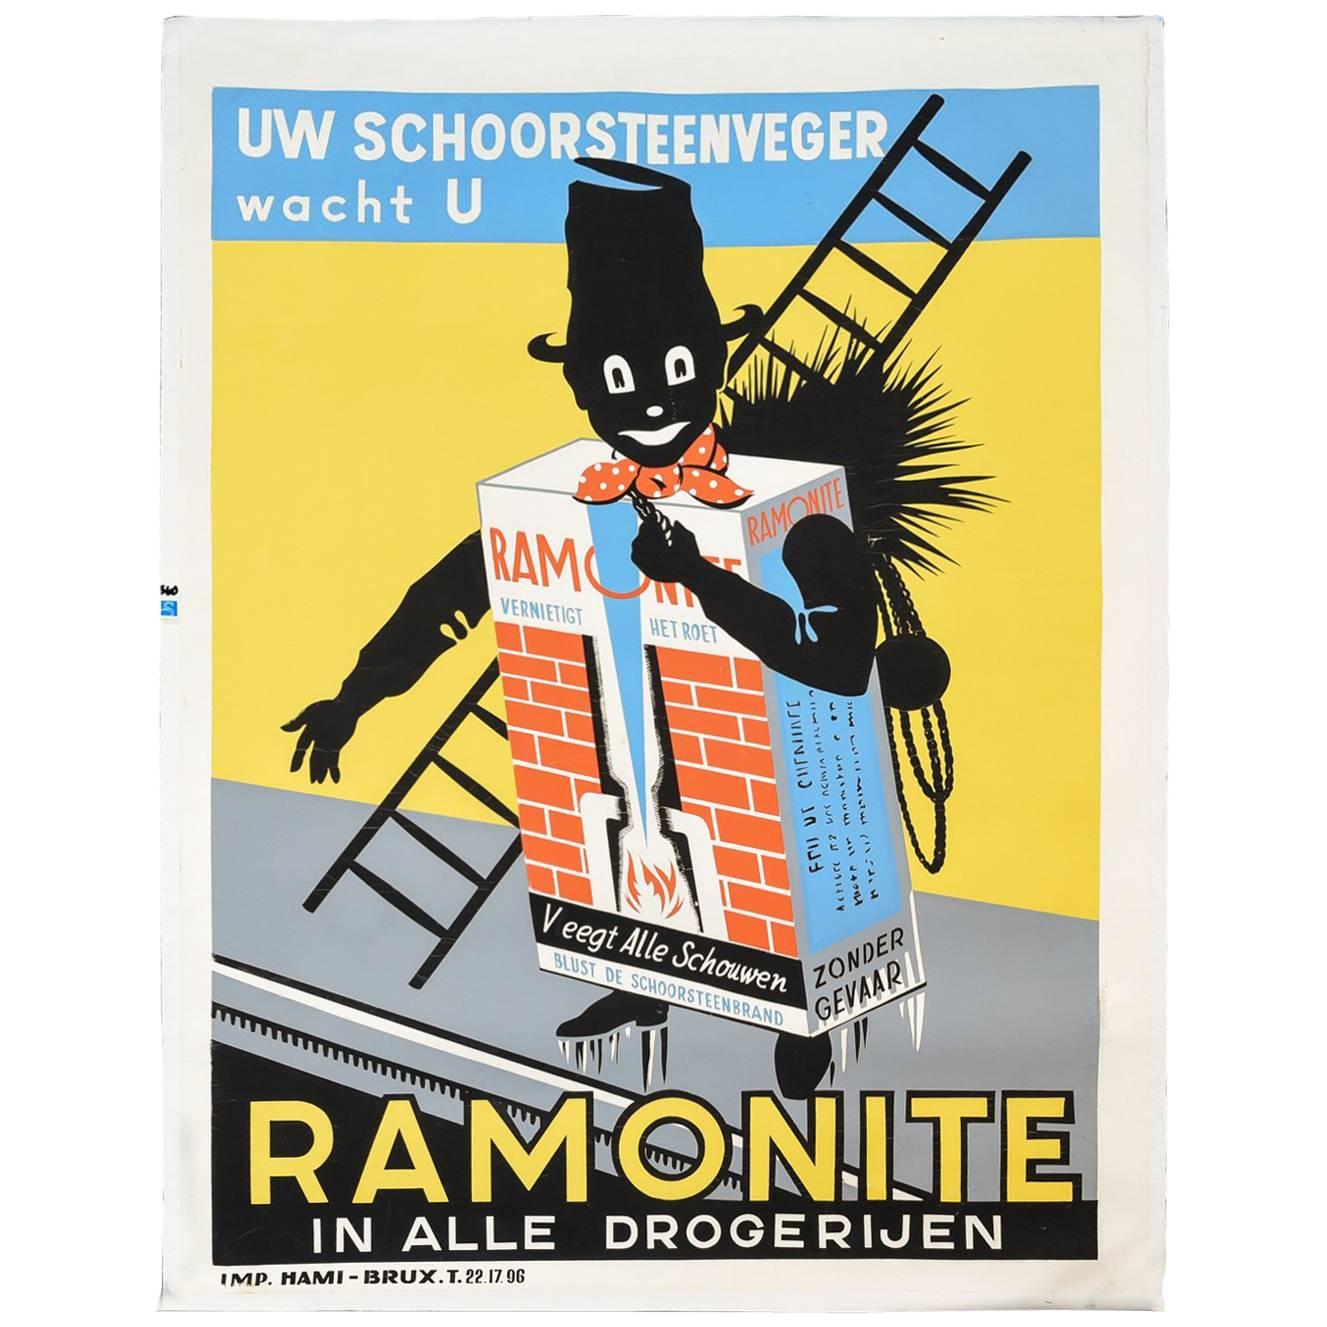 Vintage Ramonite Chimney Sweep Poster, circa 1920